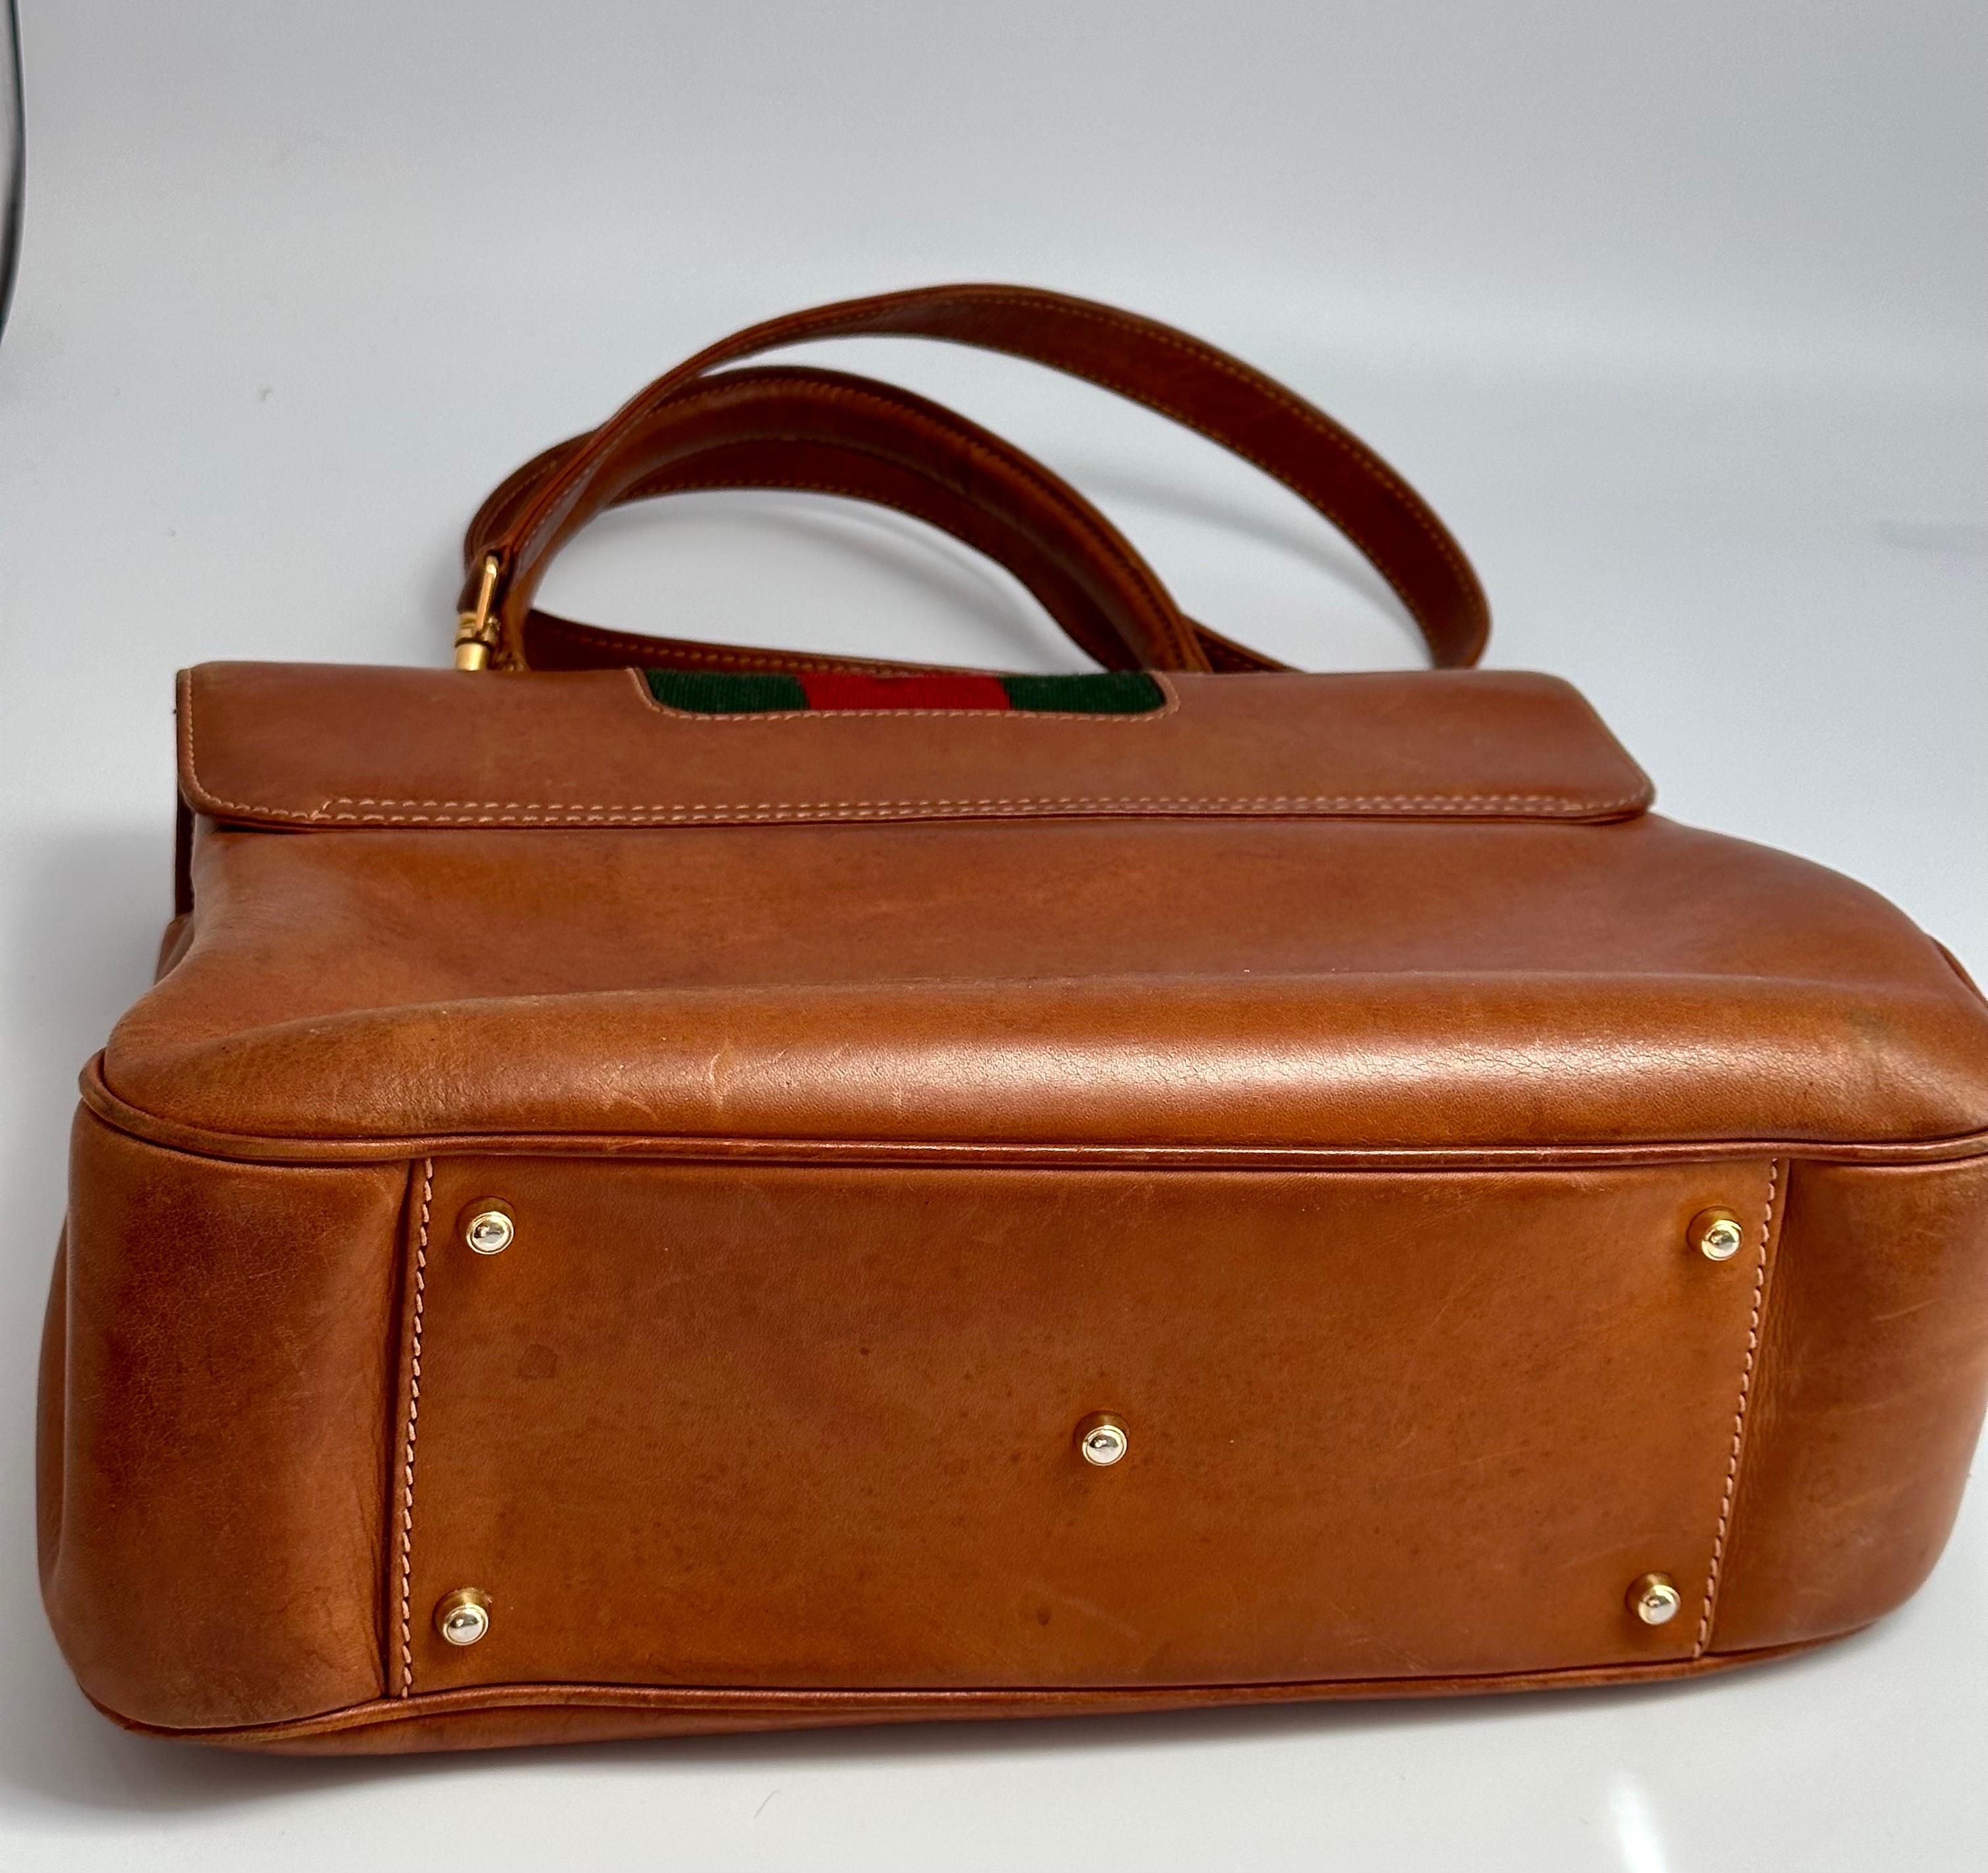 Vintage Gucci tan leather/ Brass / Fabric handbag estimated mid 1970’s 2